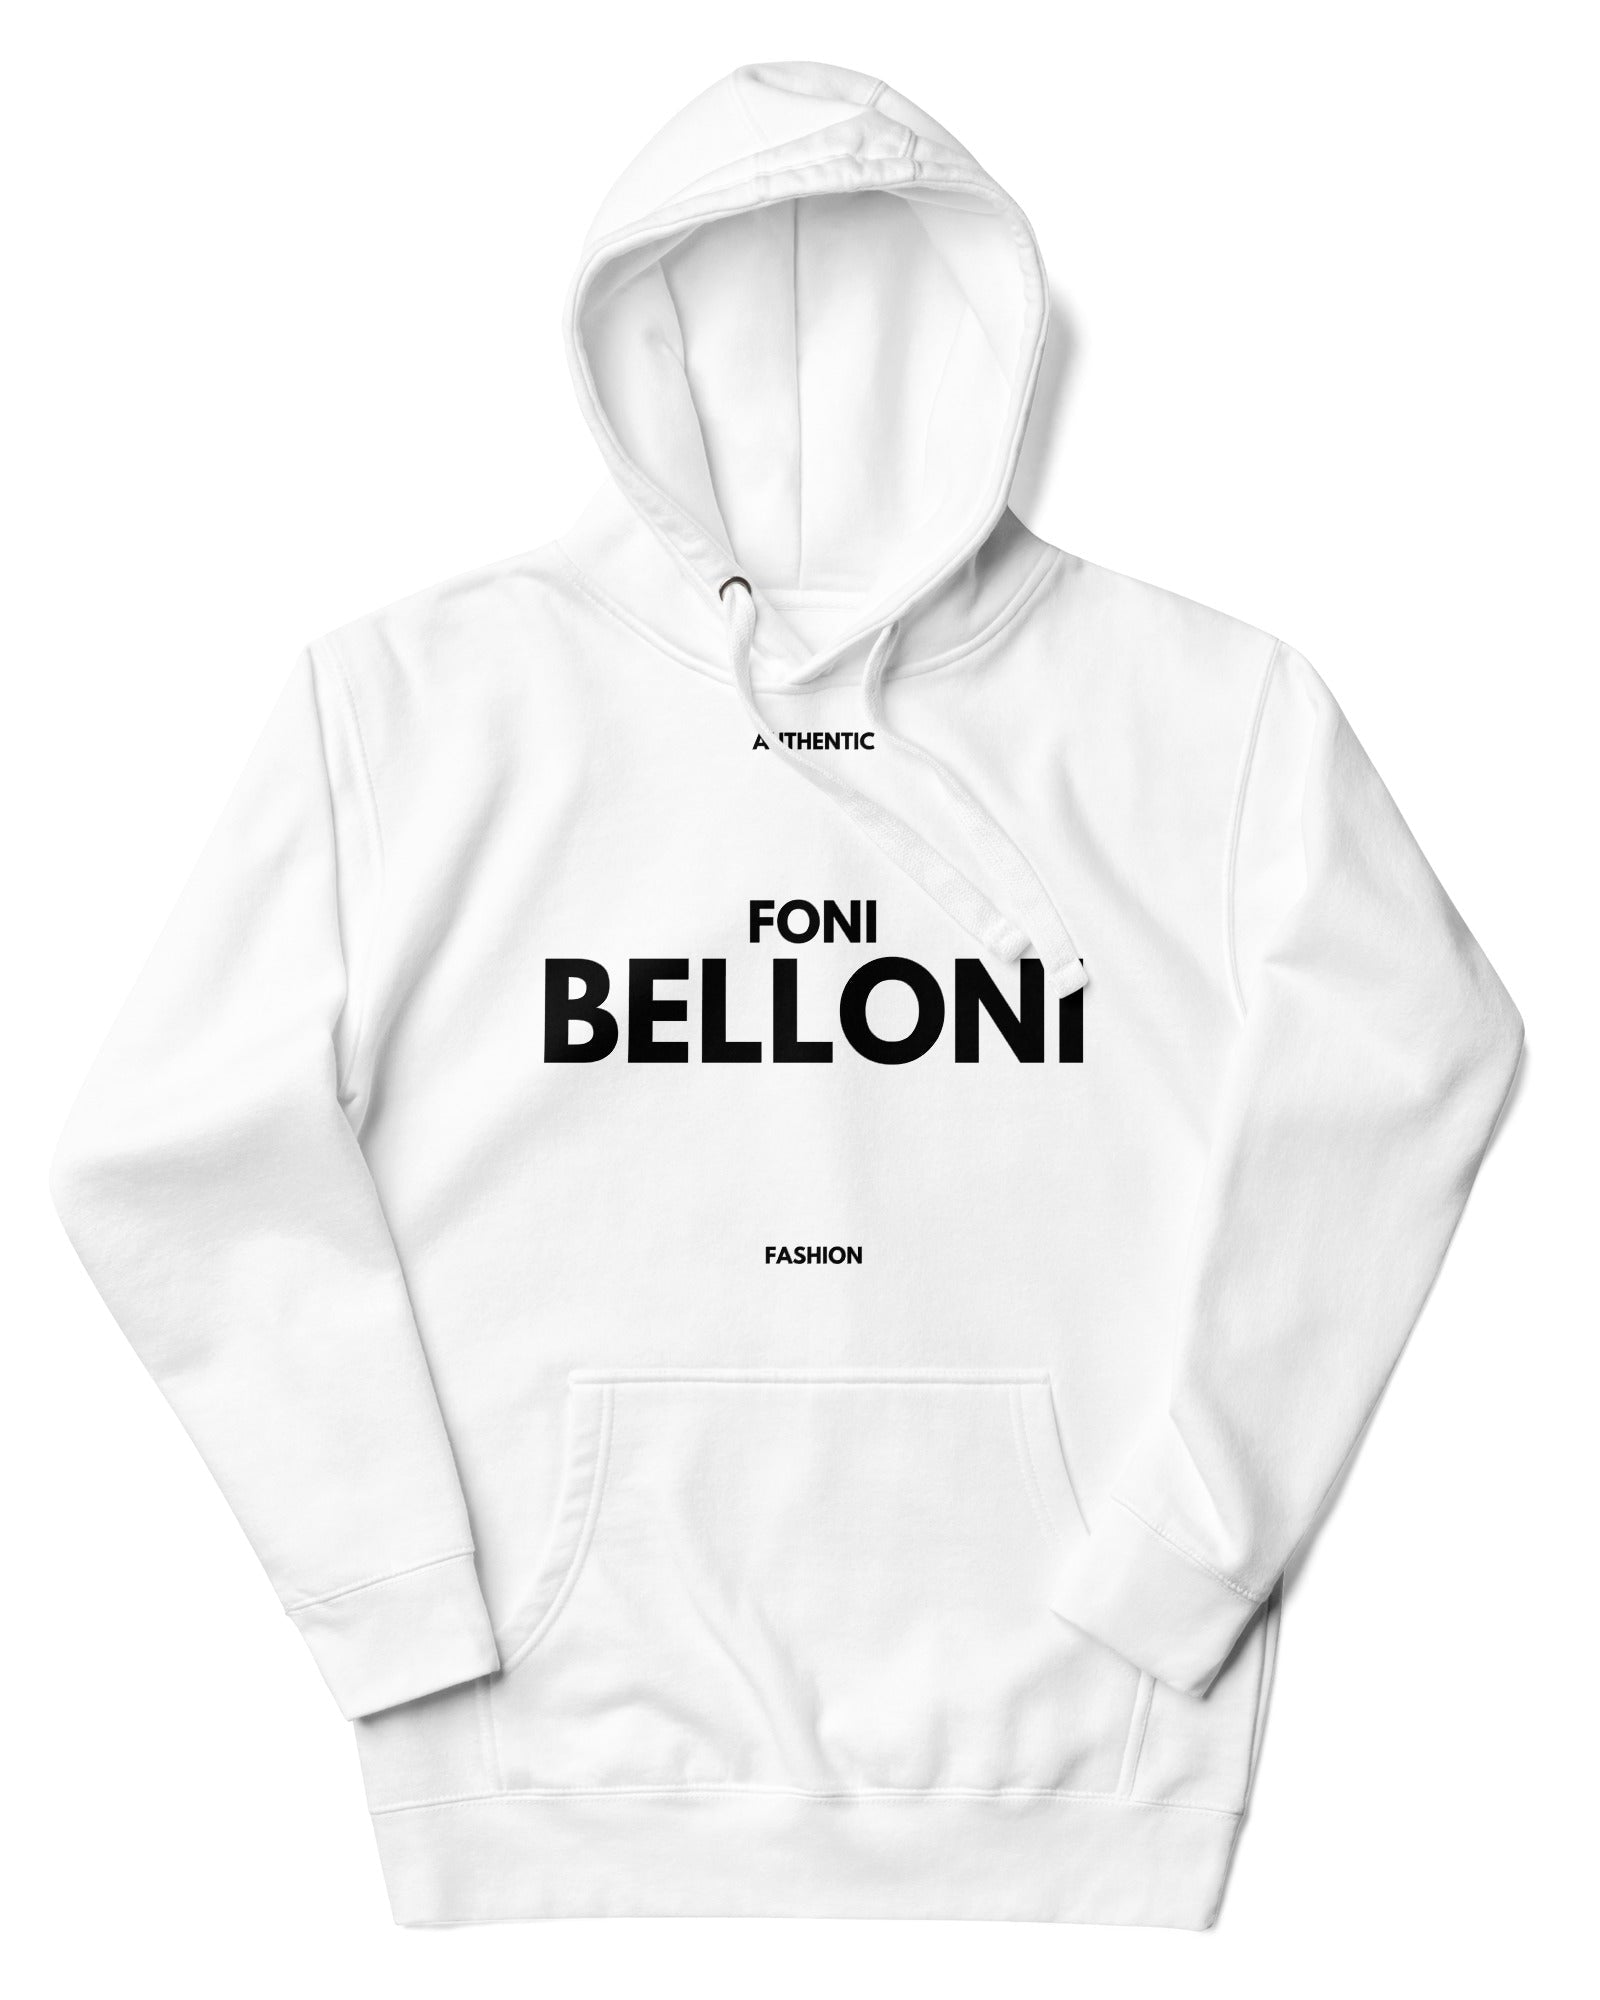 Foni Belloni Authentic Fashion Hoodie | Unisex White / S Hoodies Jolly & Goode